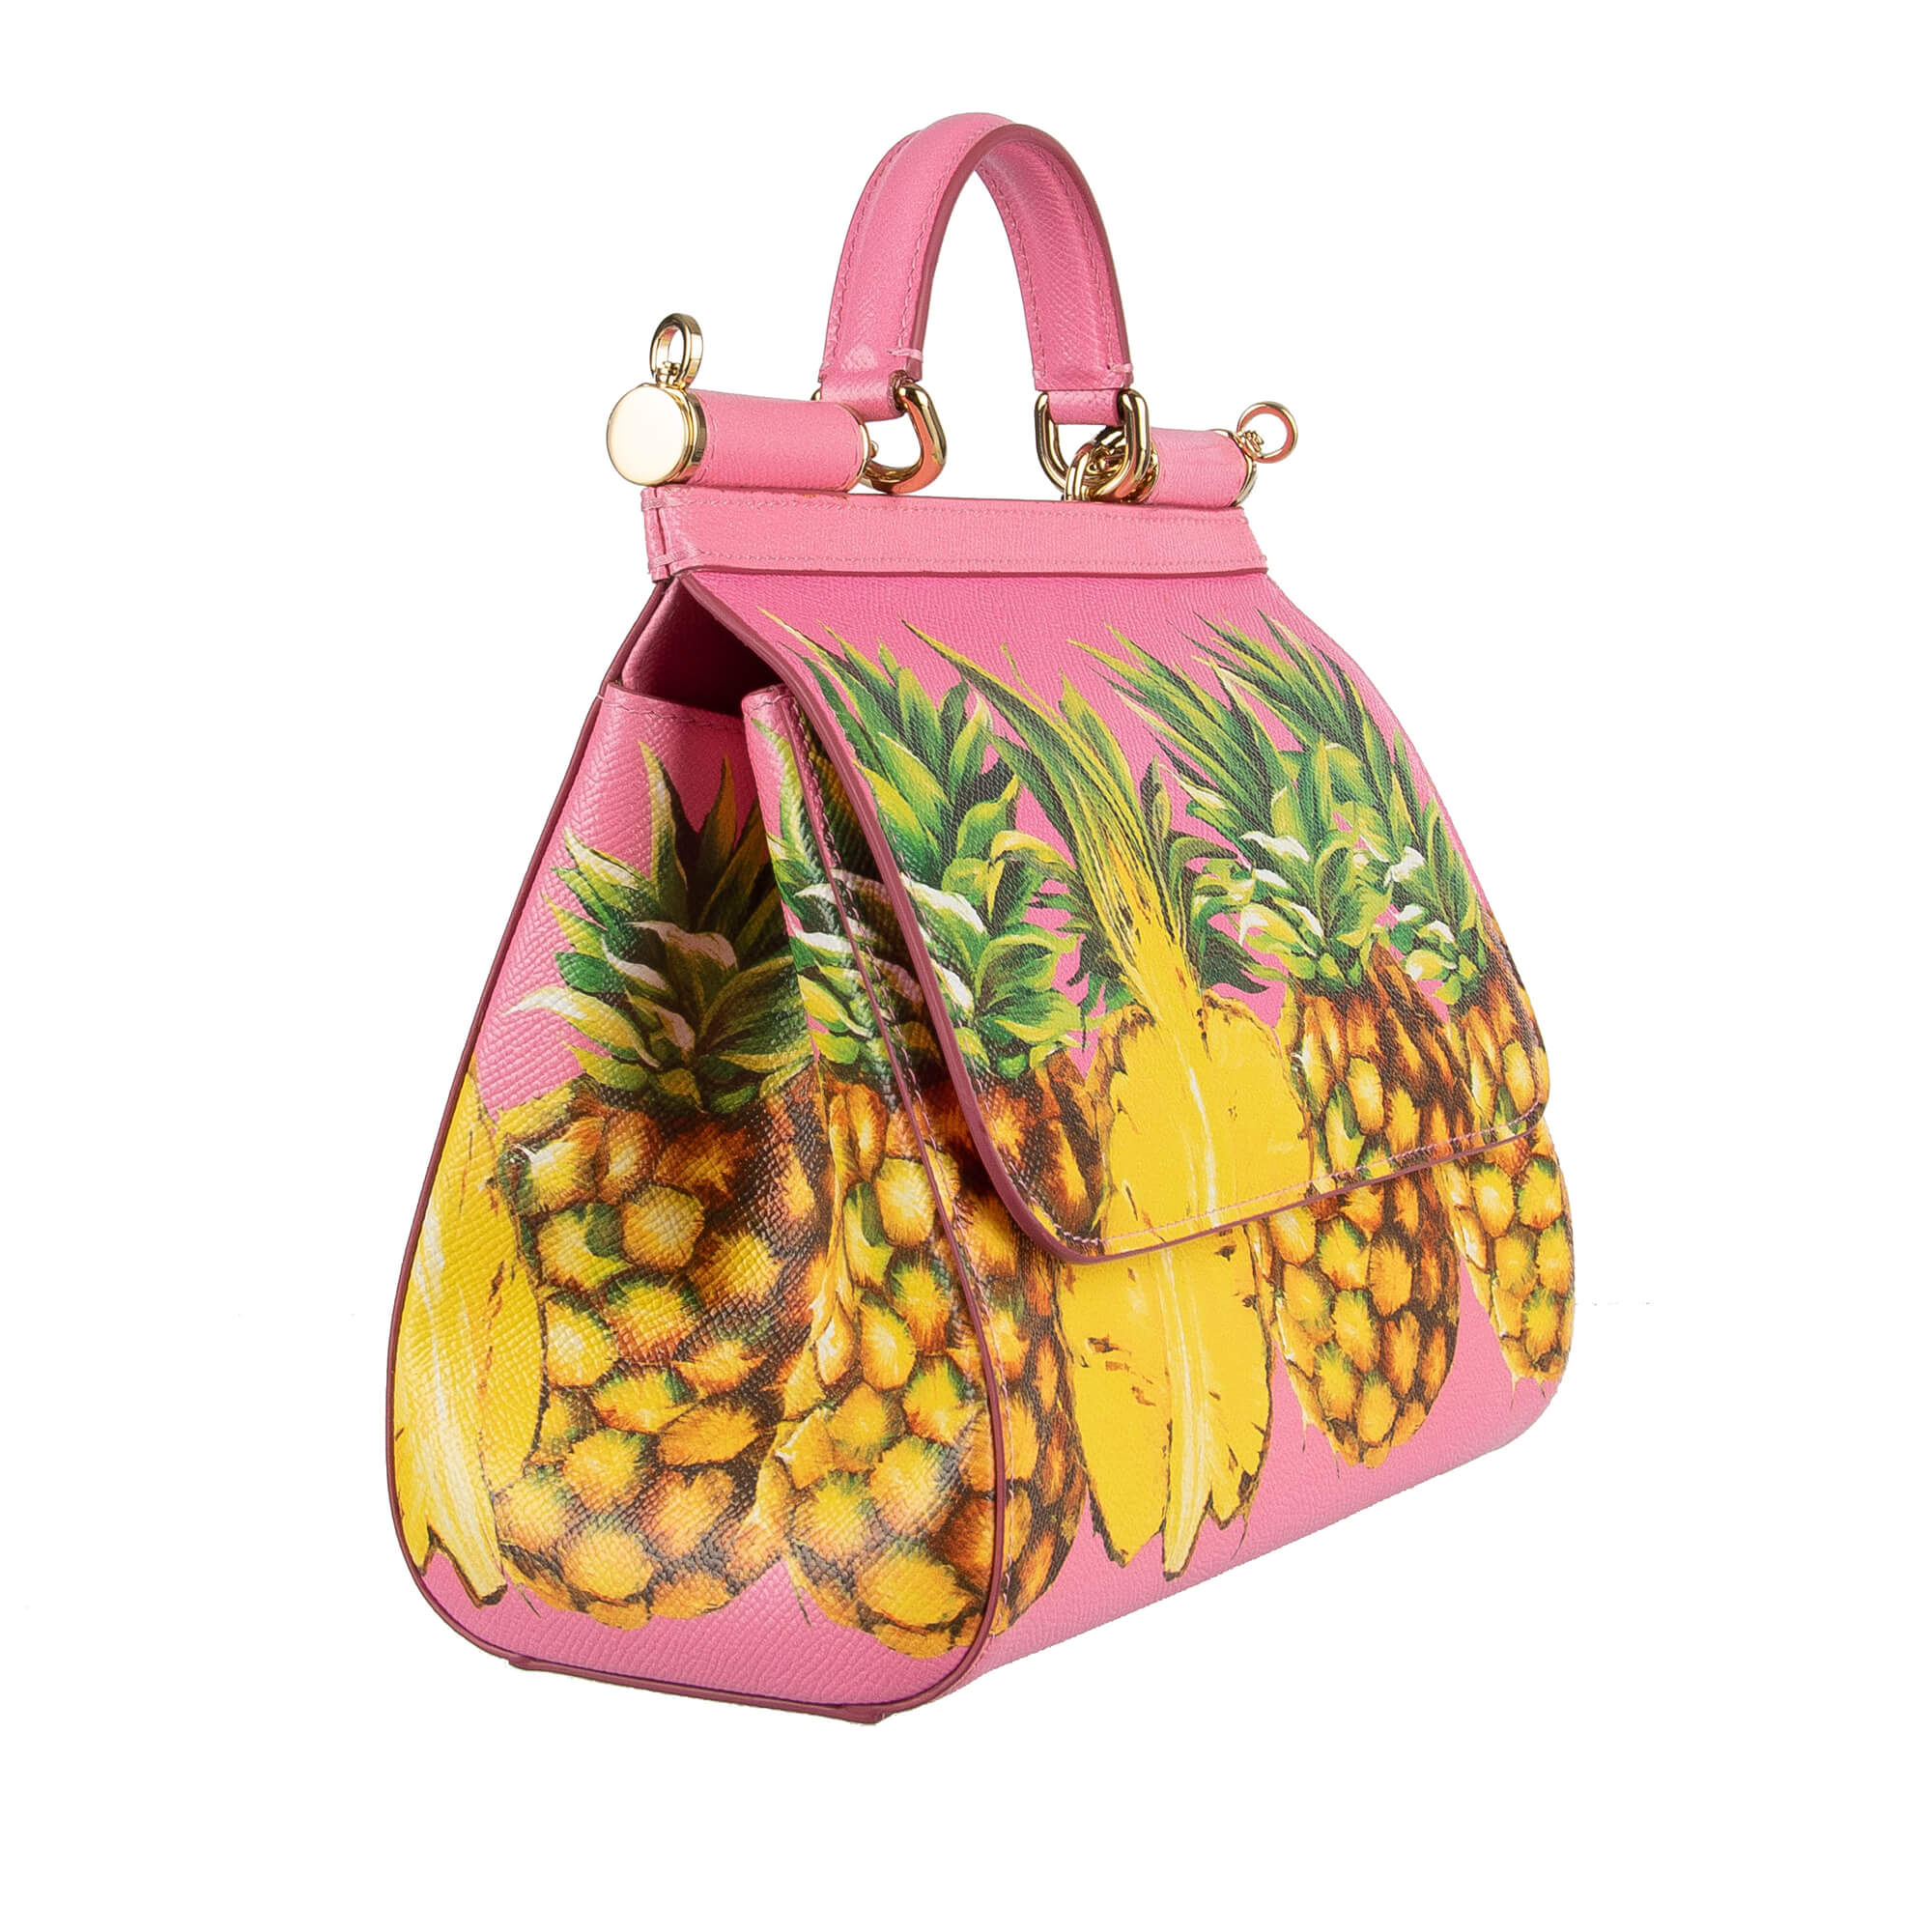 dolce and gabbana pineapple